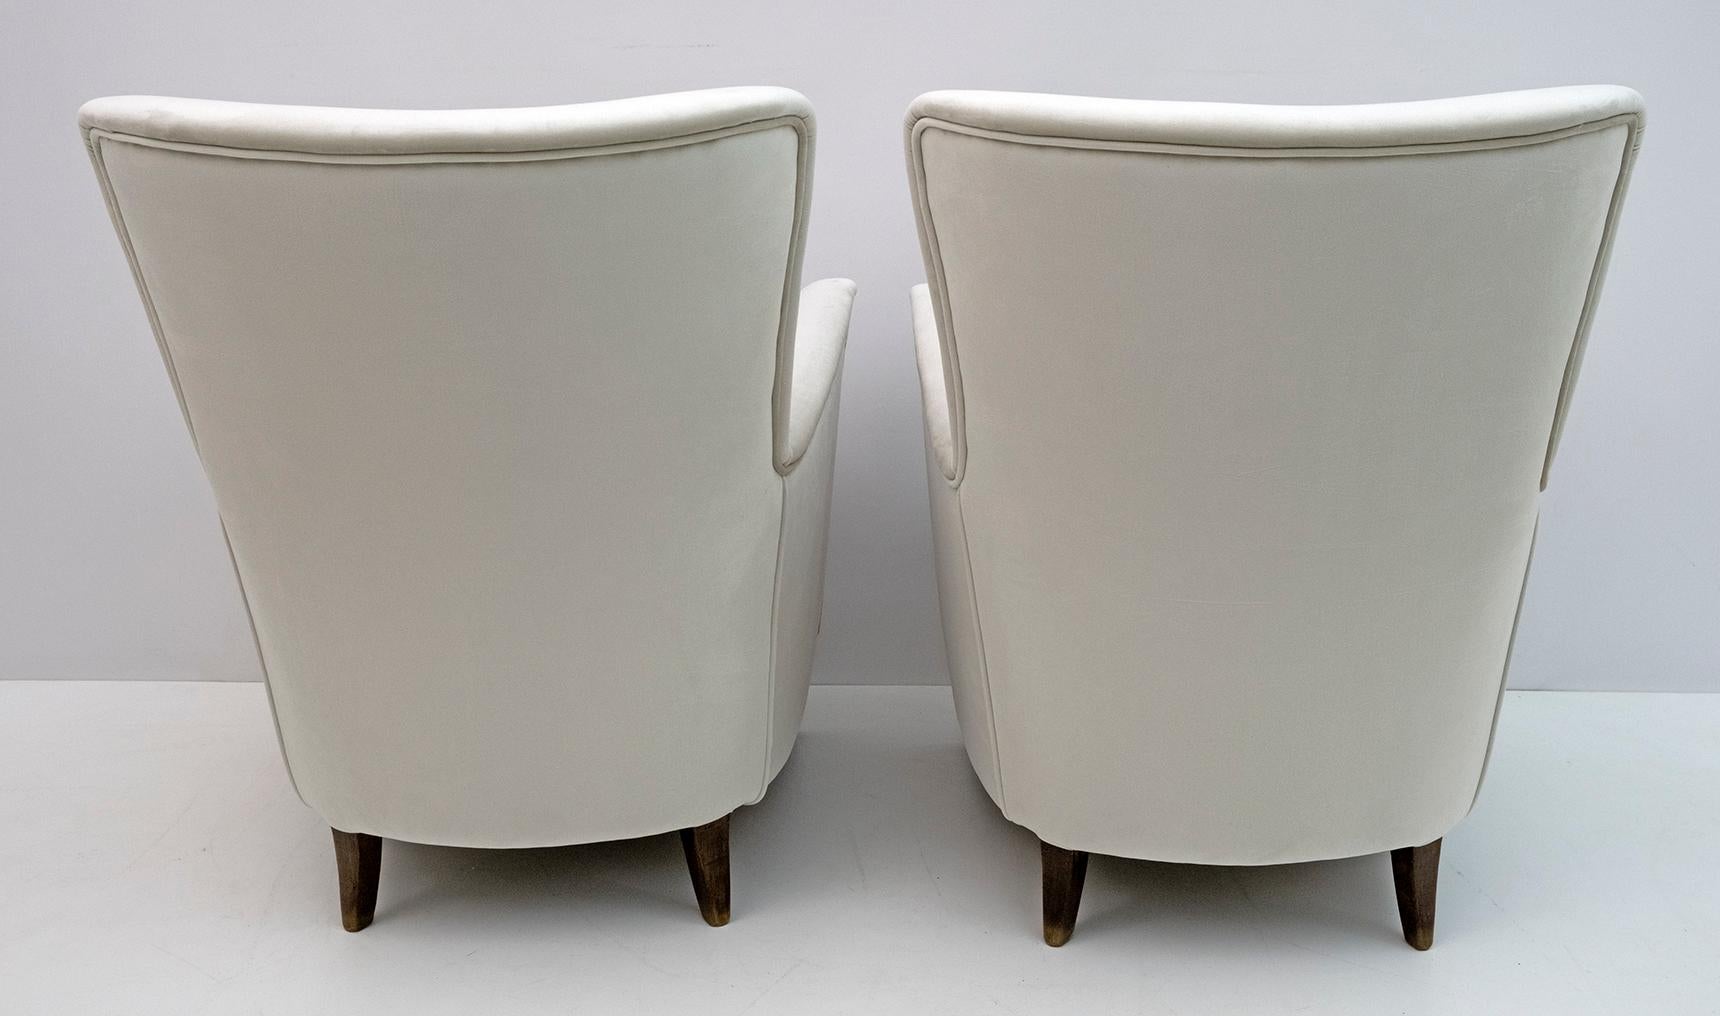 Pair of Gio Ponti Style Mid-Century Modern Italian Velvet Armchairs for Isa, 50s For Sale 1